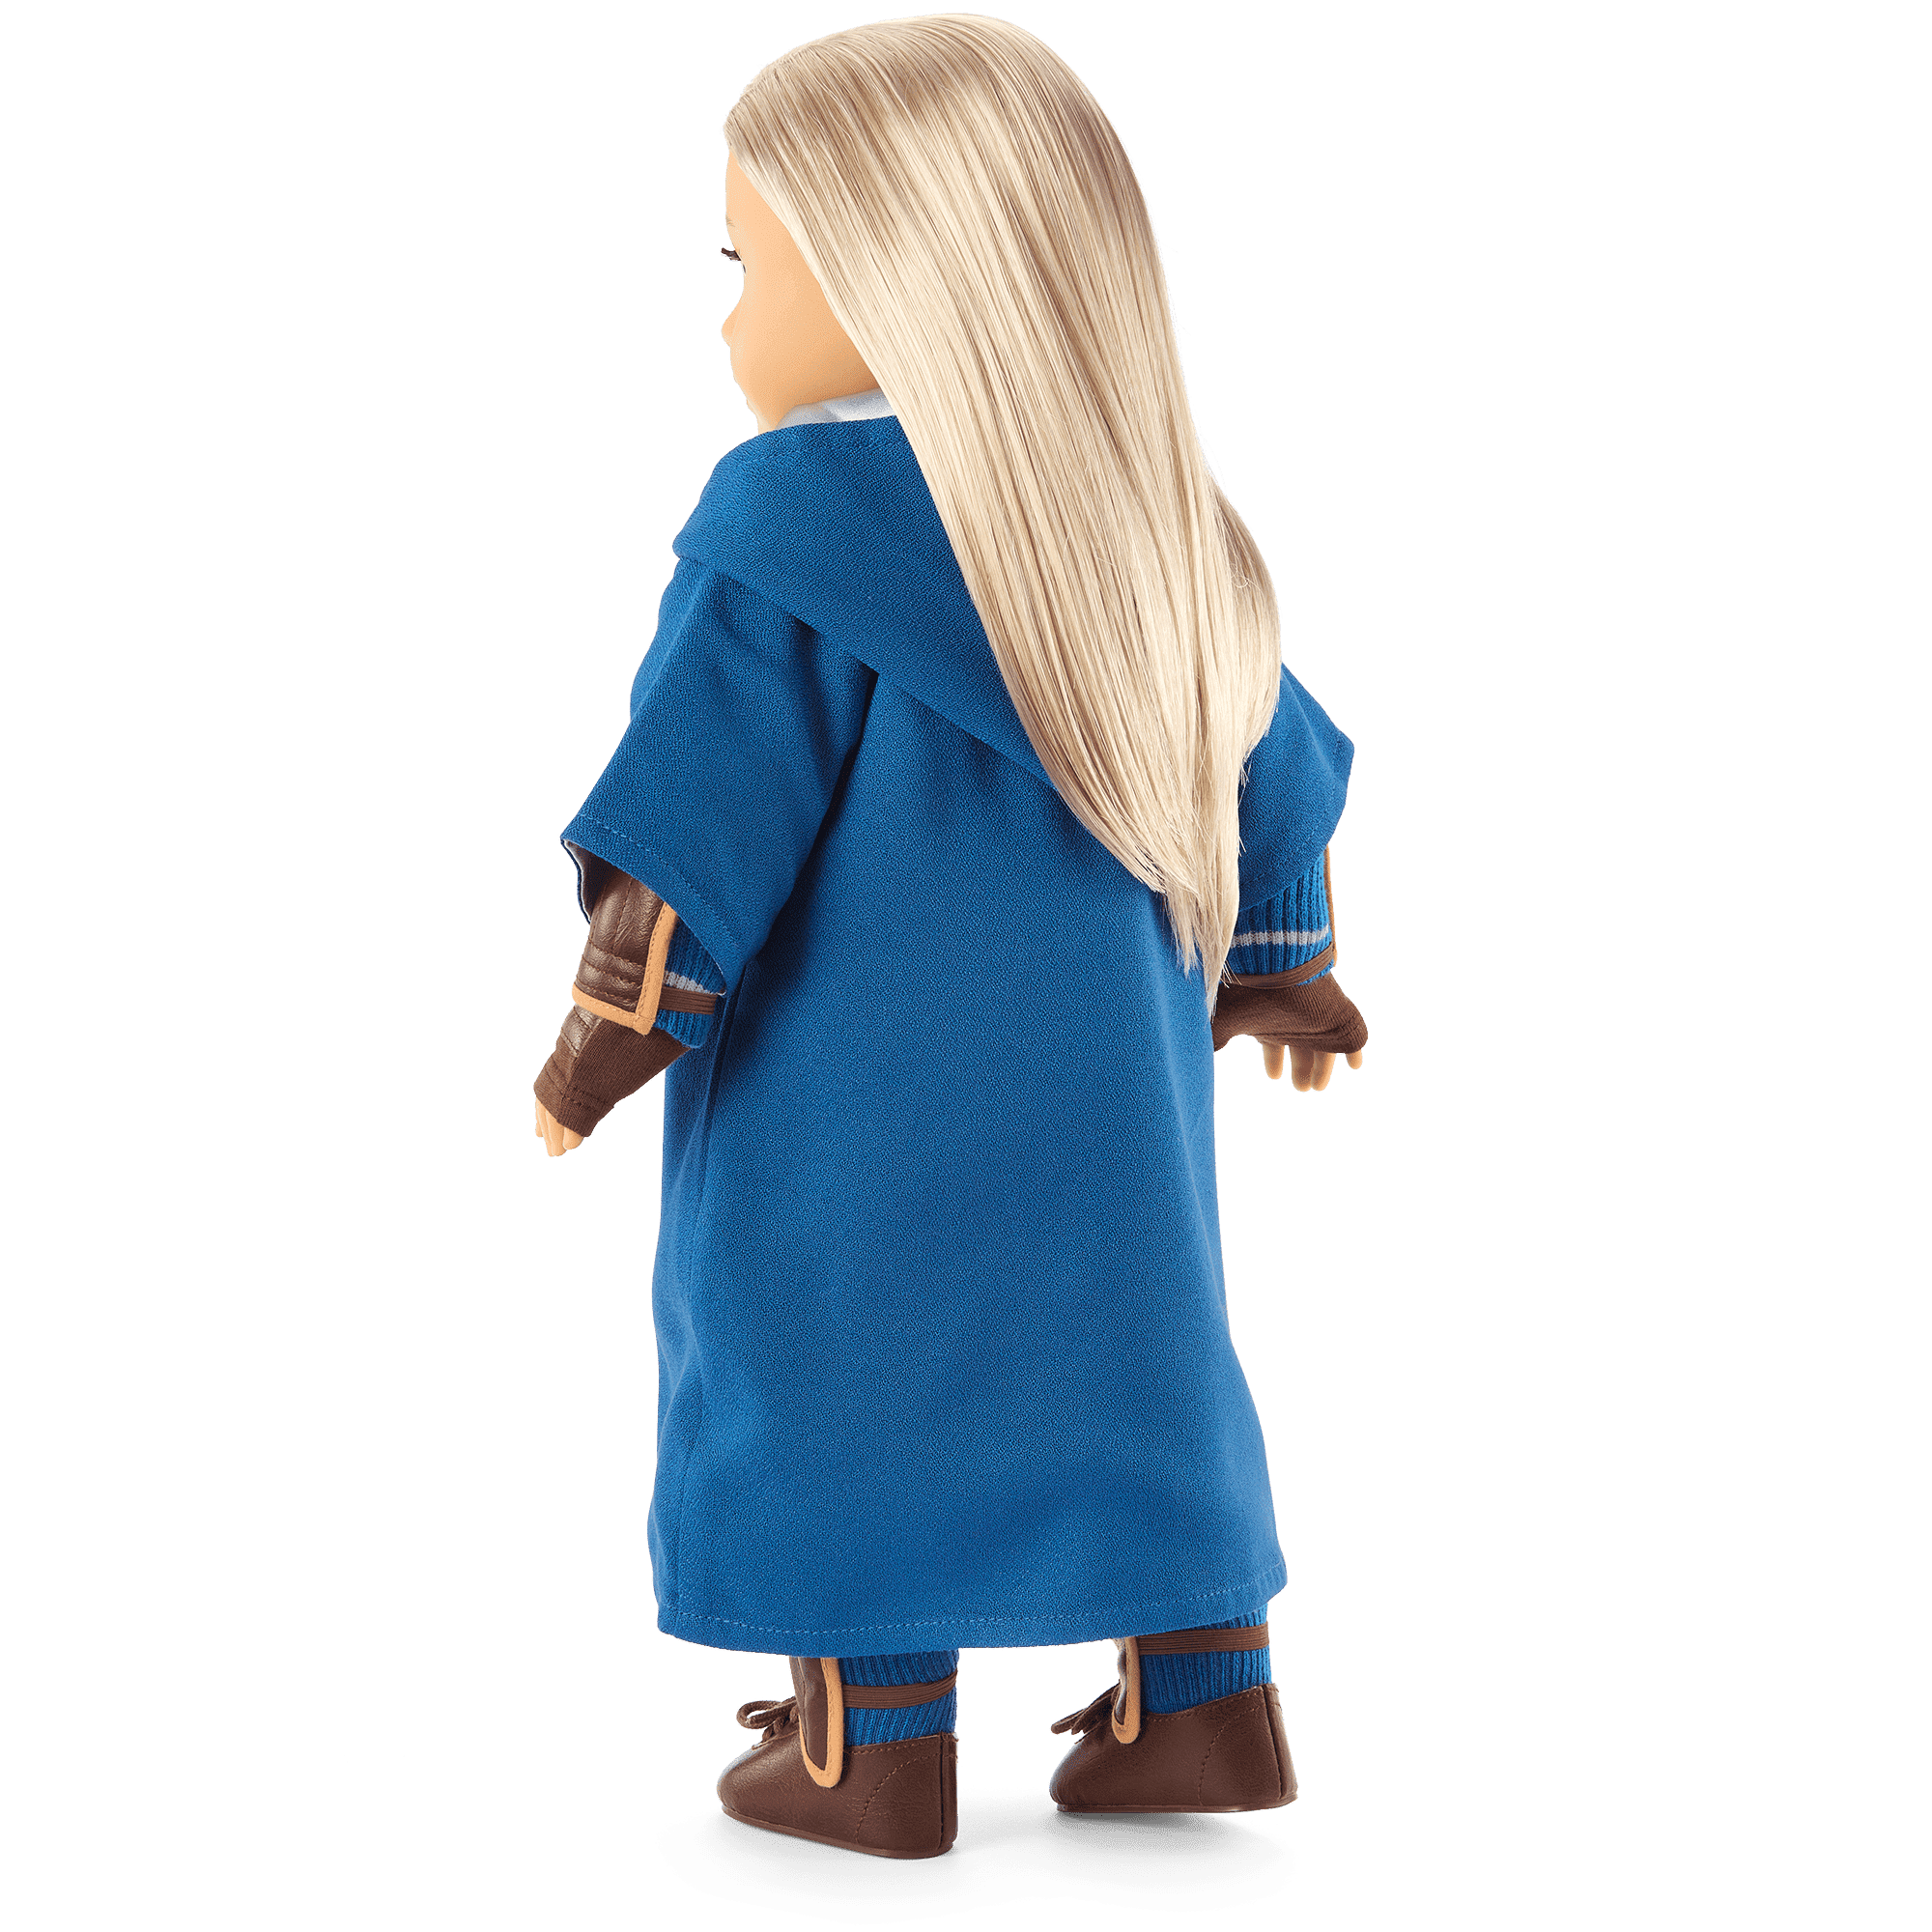 American Girl® Ravenclaw™ Quidditch™ Uniform for 18-inch Dolls